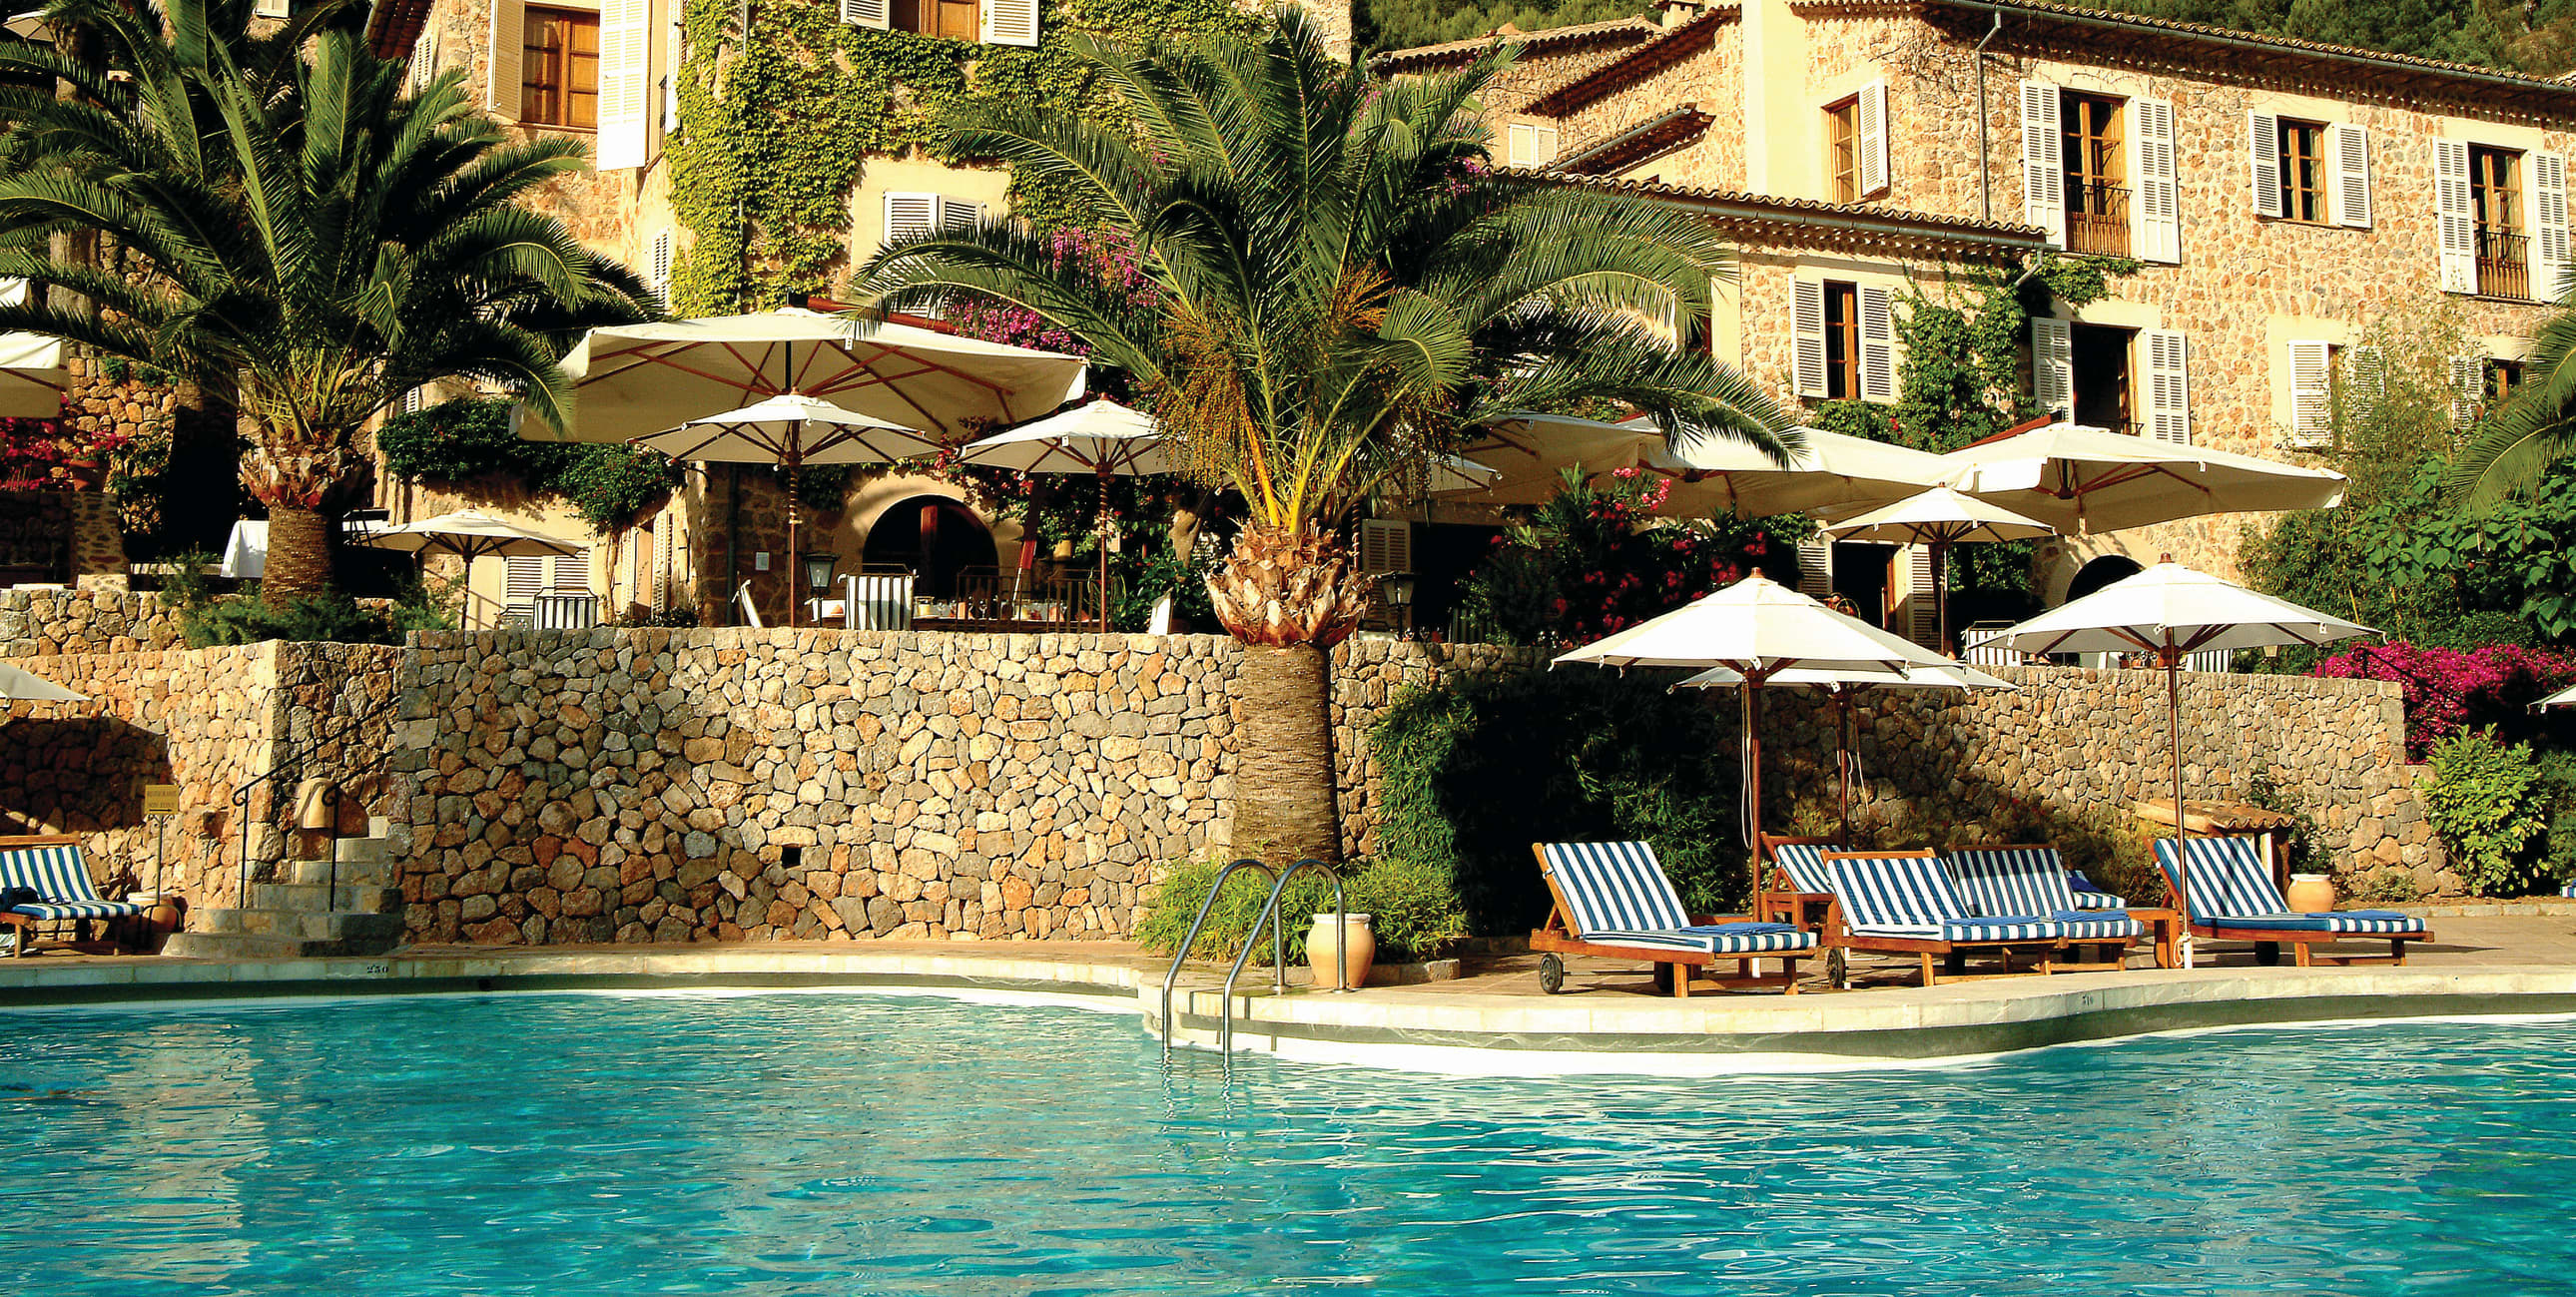 La Residencia, A Belmond Hotel, Mallorca, Majorca